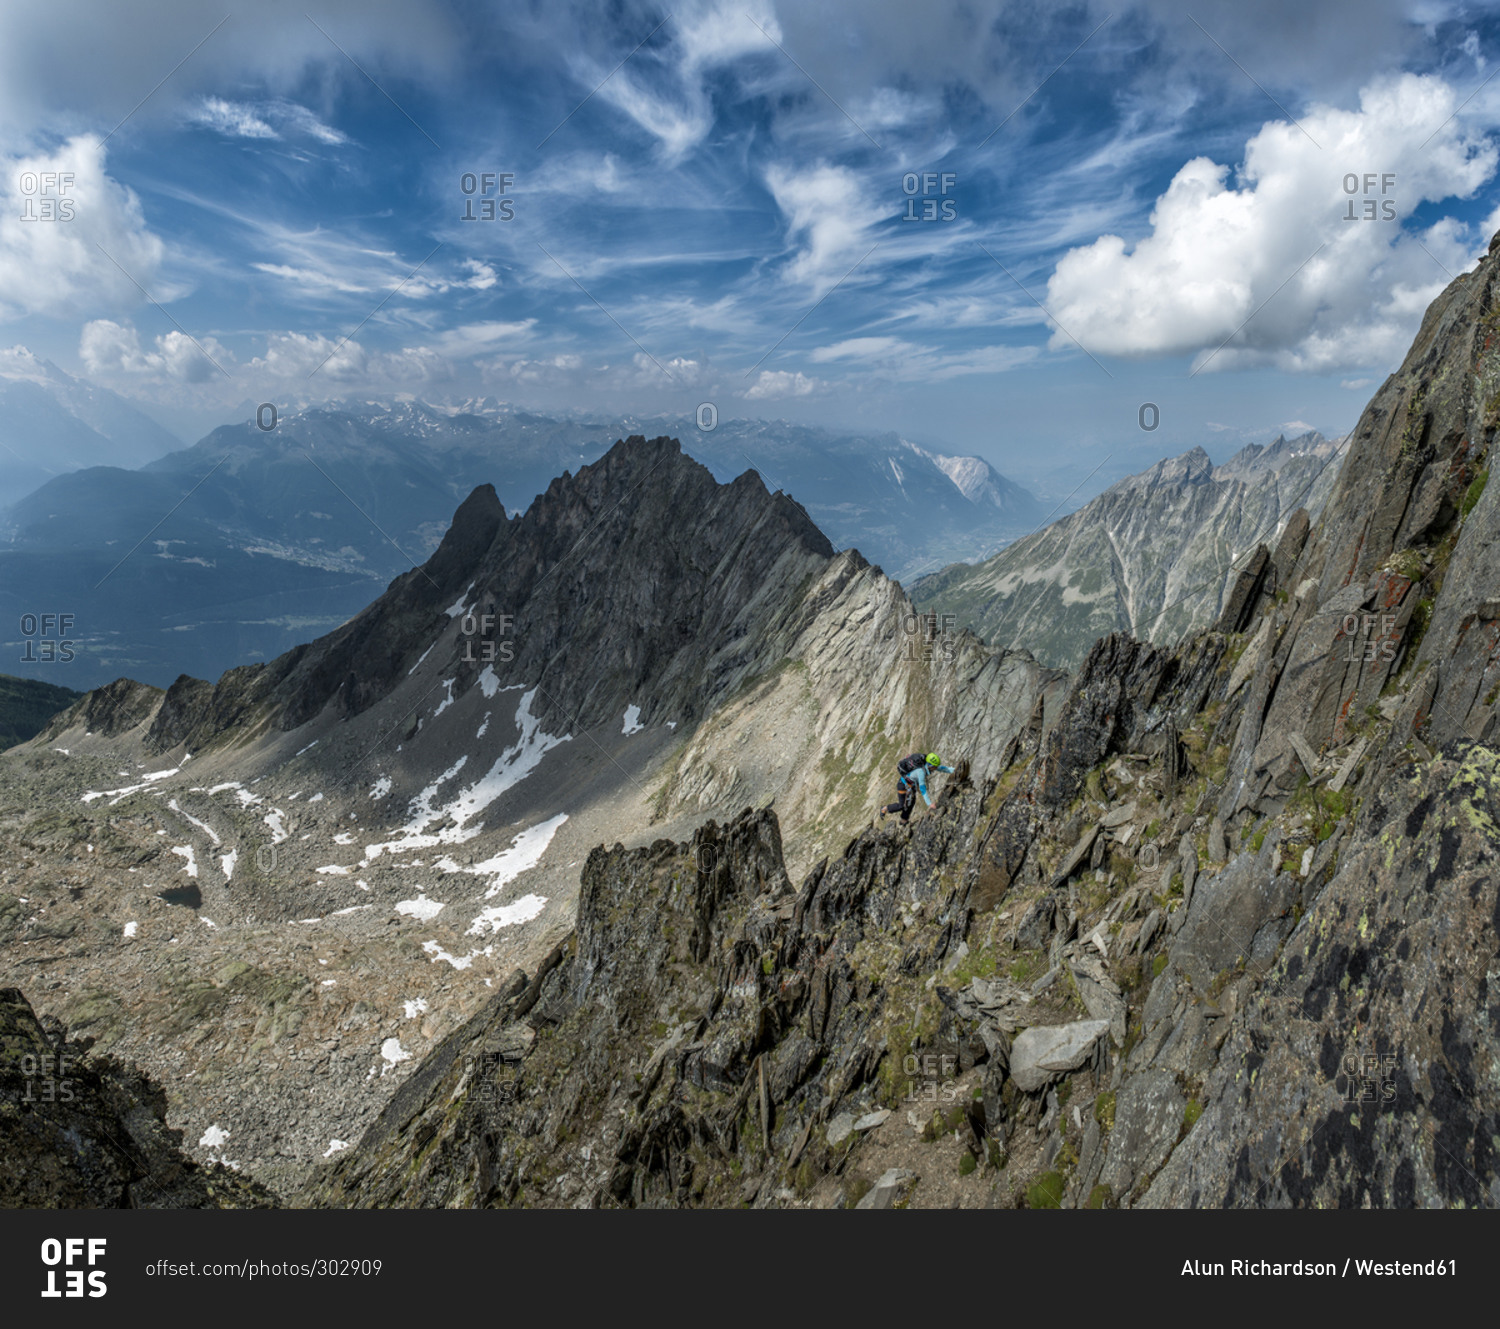 A person climbing Wiwannihorn mountain in Switzerland